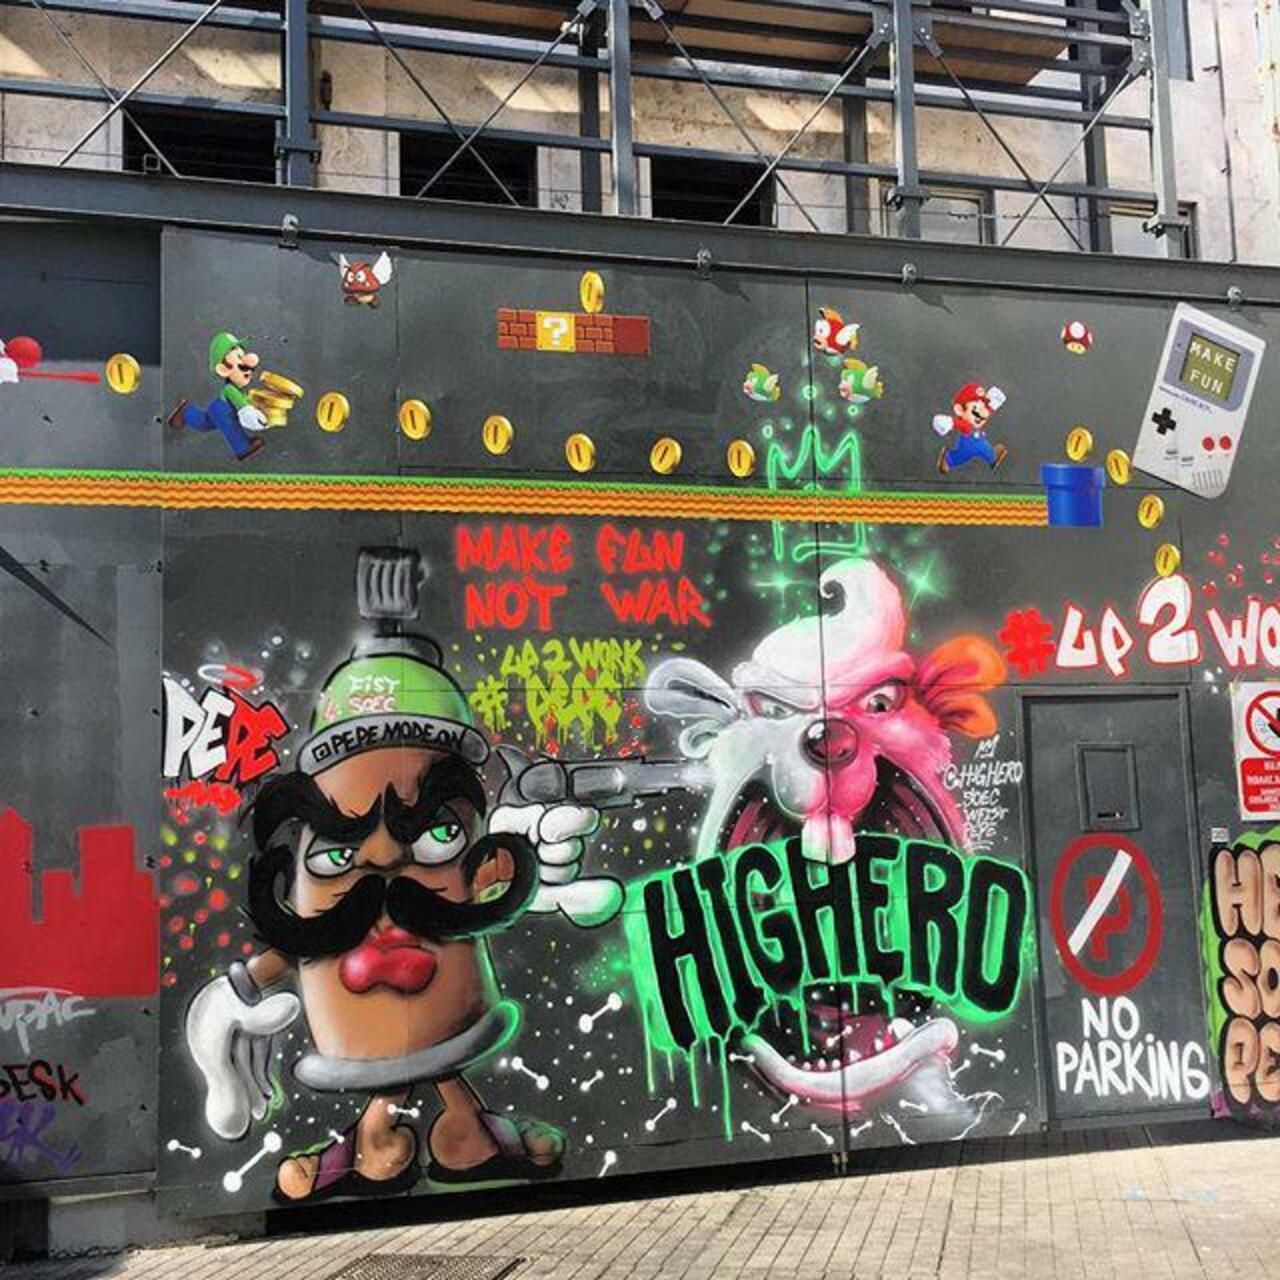 RT @StArtEverywhere: Make fun, not war.  #Gameboy #streetart #streetartistanbul #stencil #graffiti #up2work by chnylmz http://t.co/0yrJbtbyGK